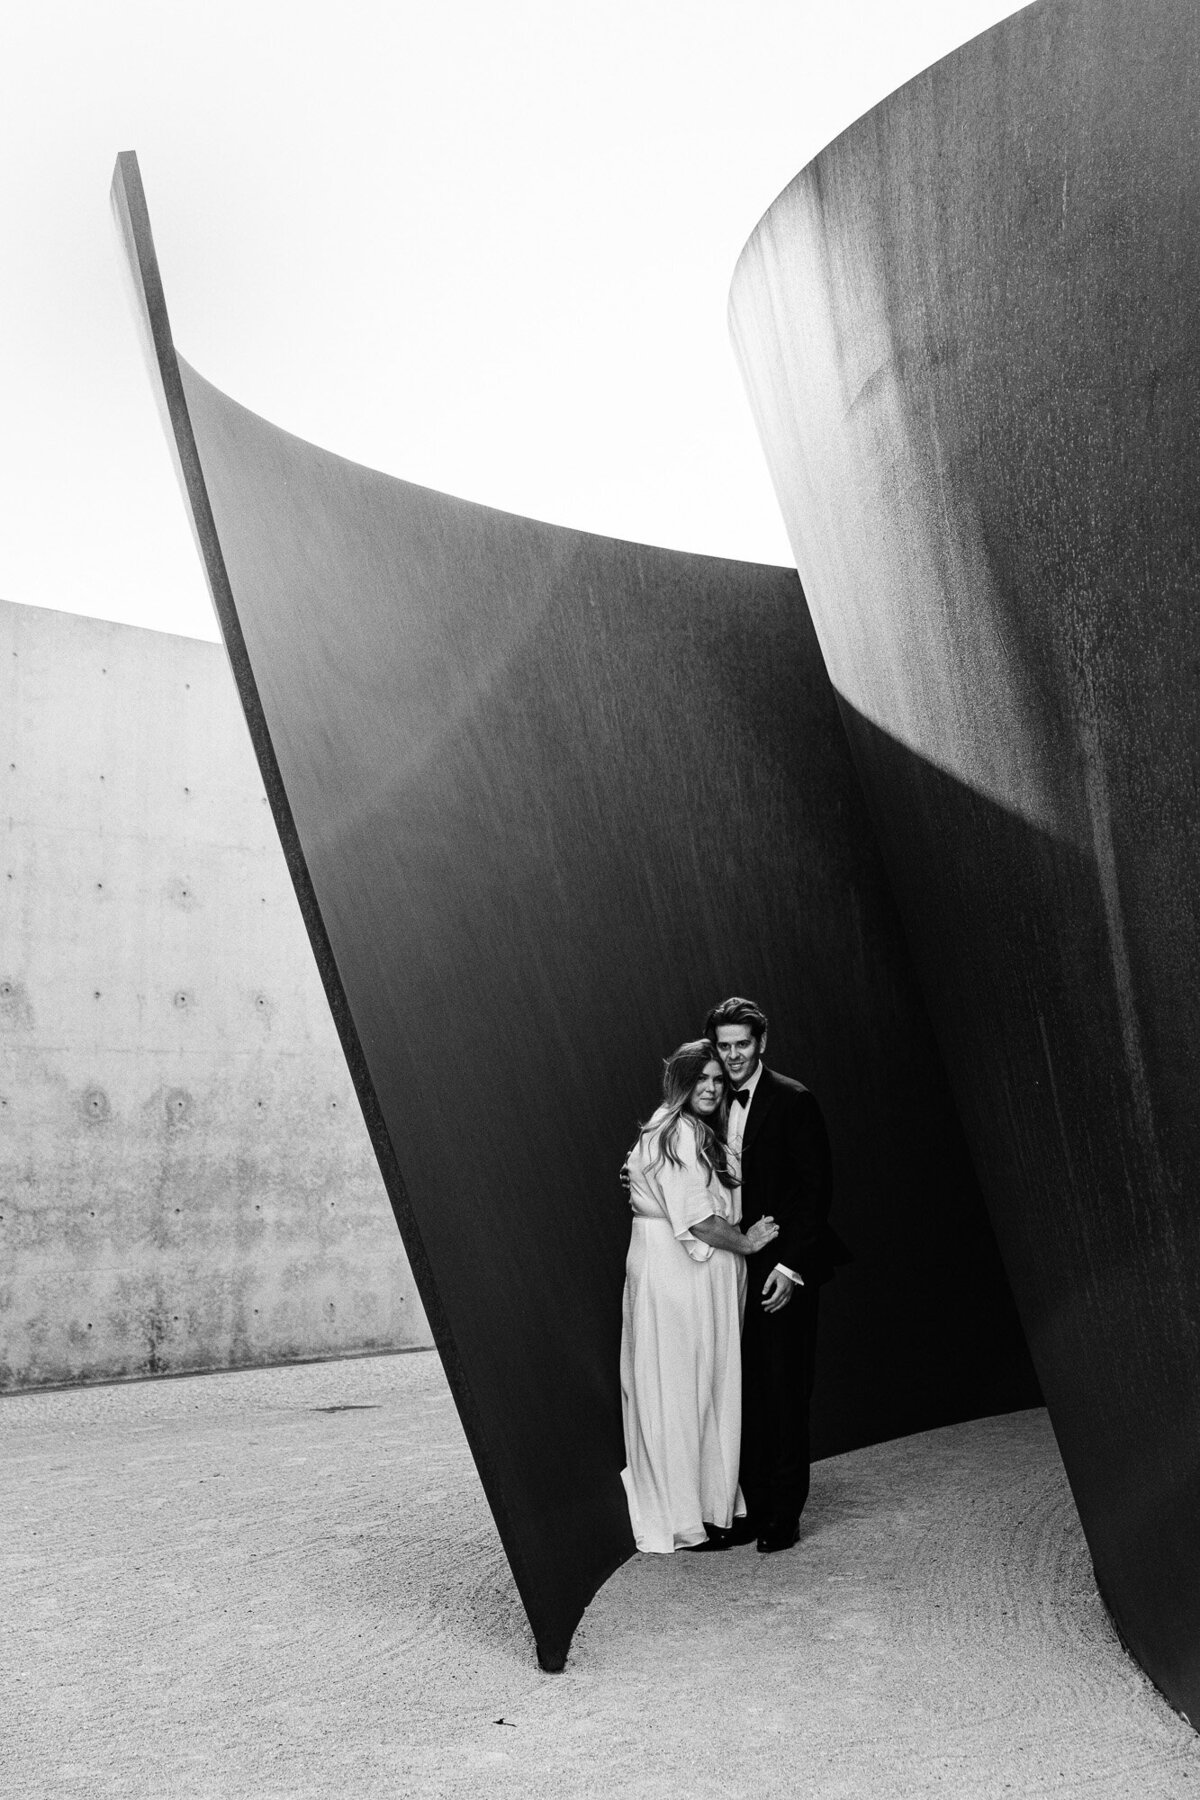 A couple poses by "joe" designed by sculptor Richard Serra.